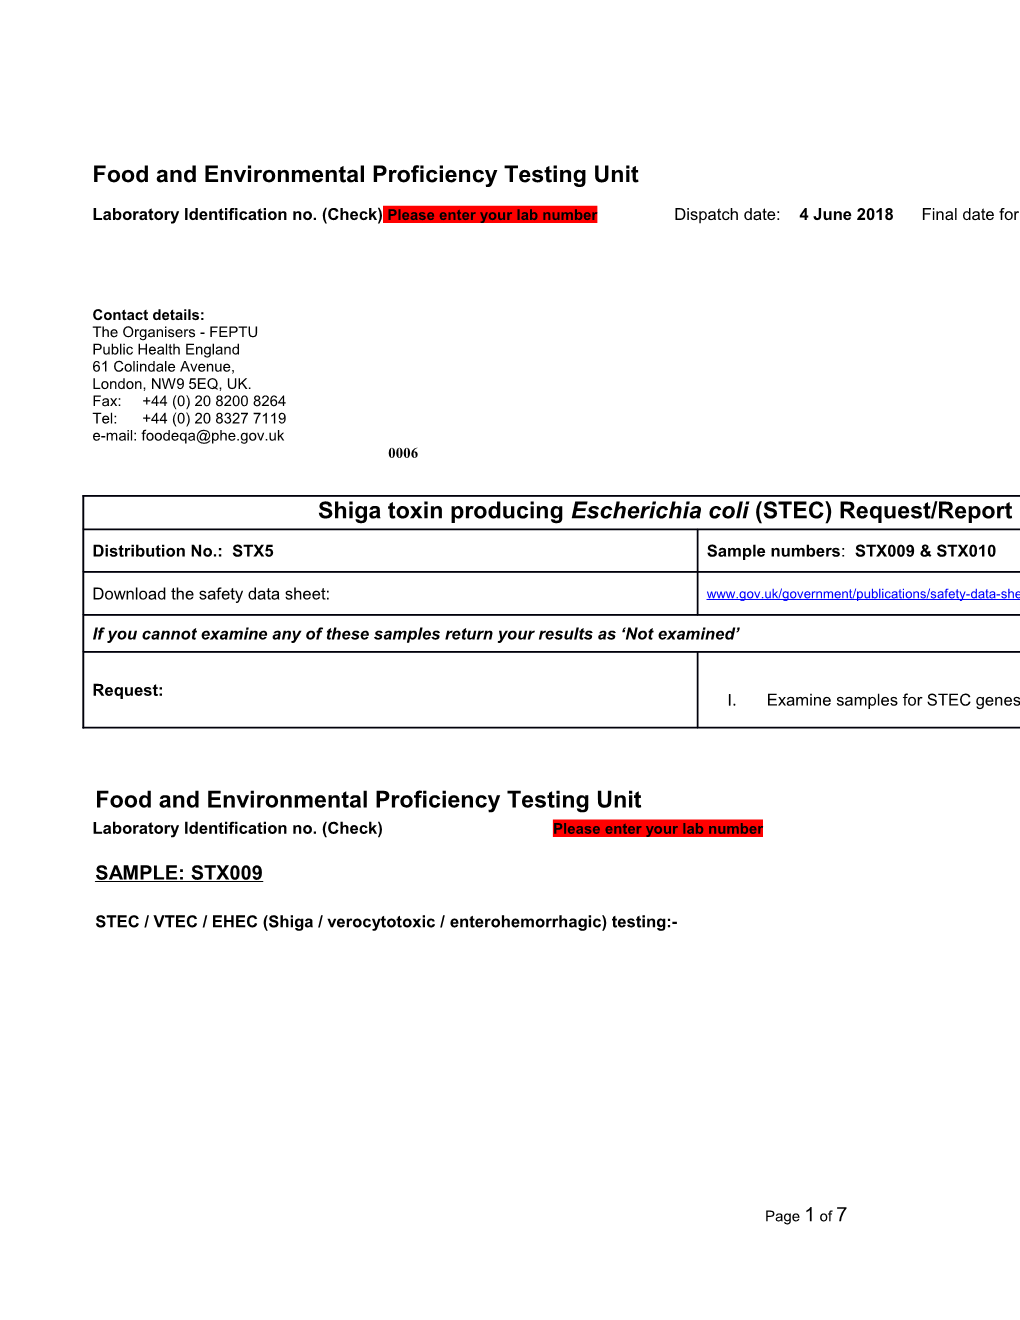 Shiga Toxin Producing Escherichia Coli (STEC) Request Report Form